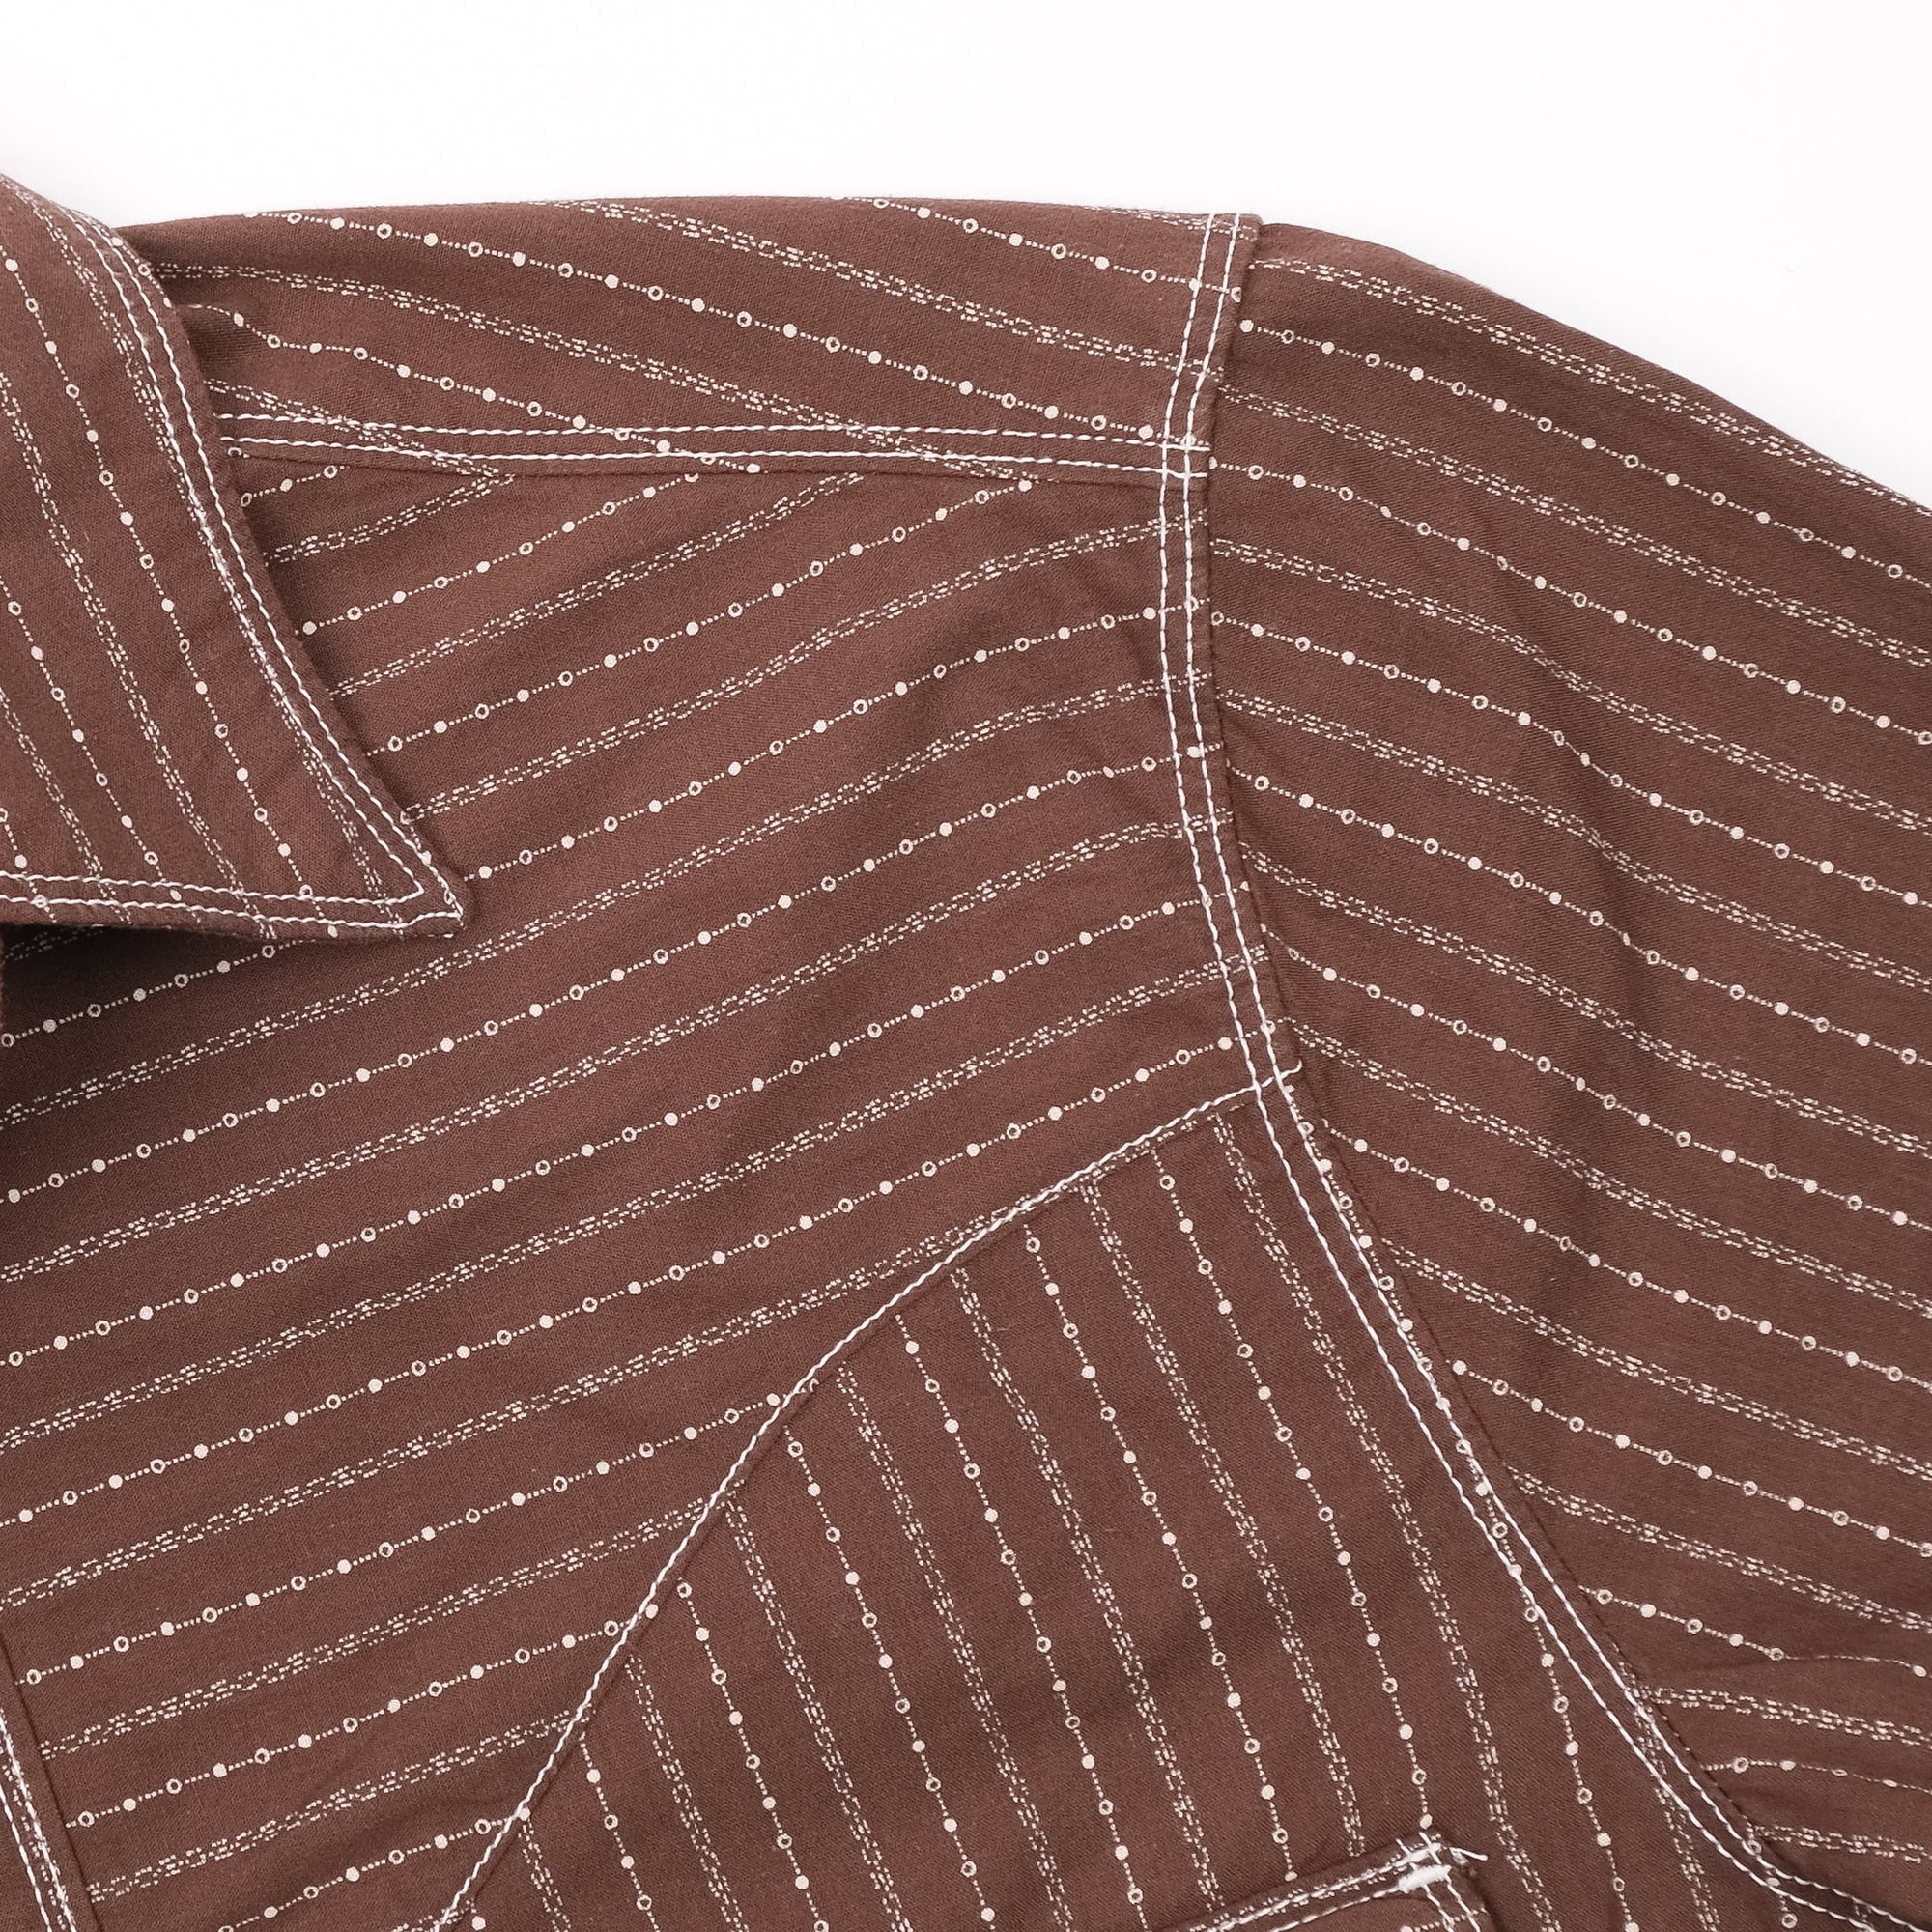 Freenote Cloth Packard - Brown Stripe